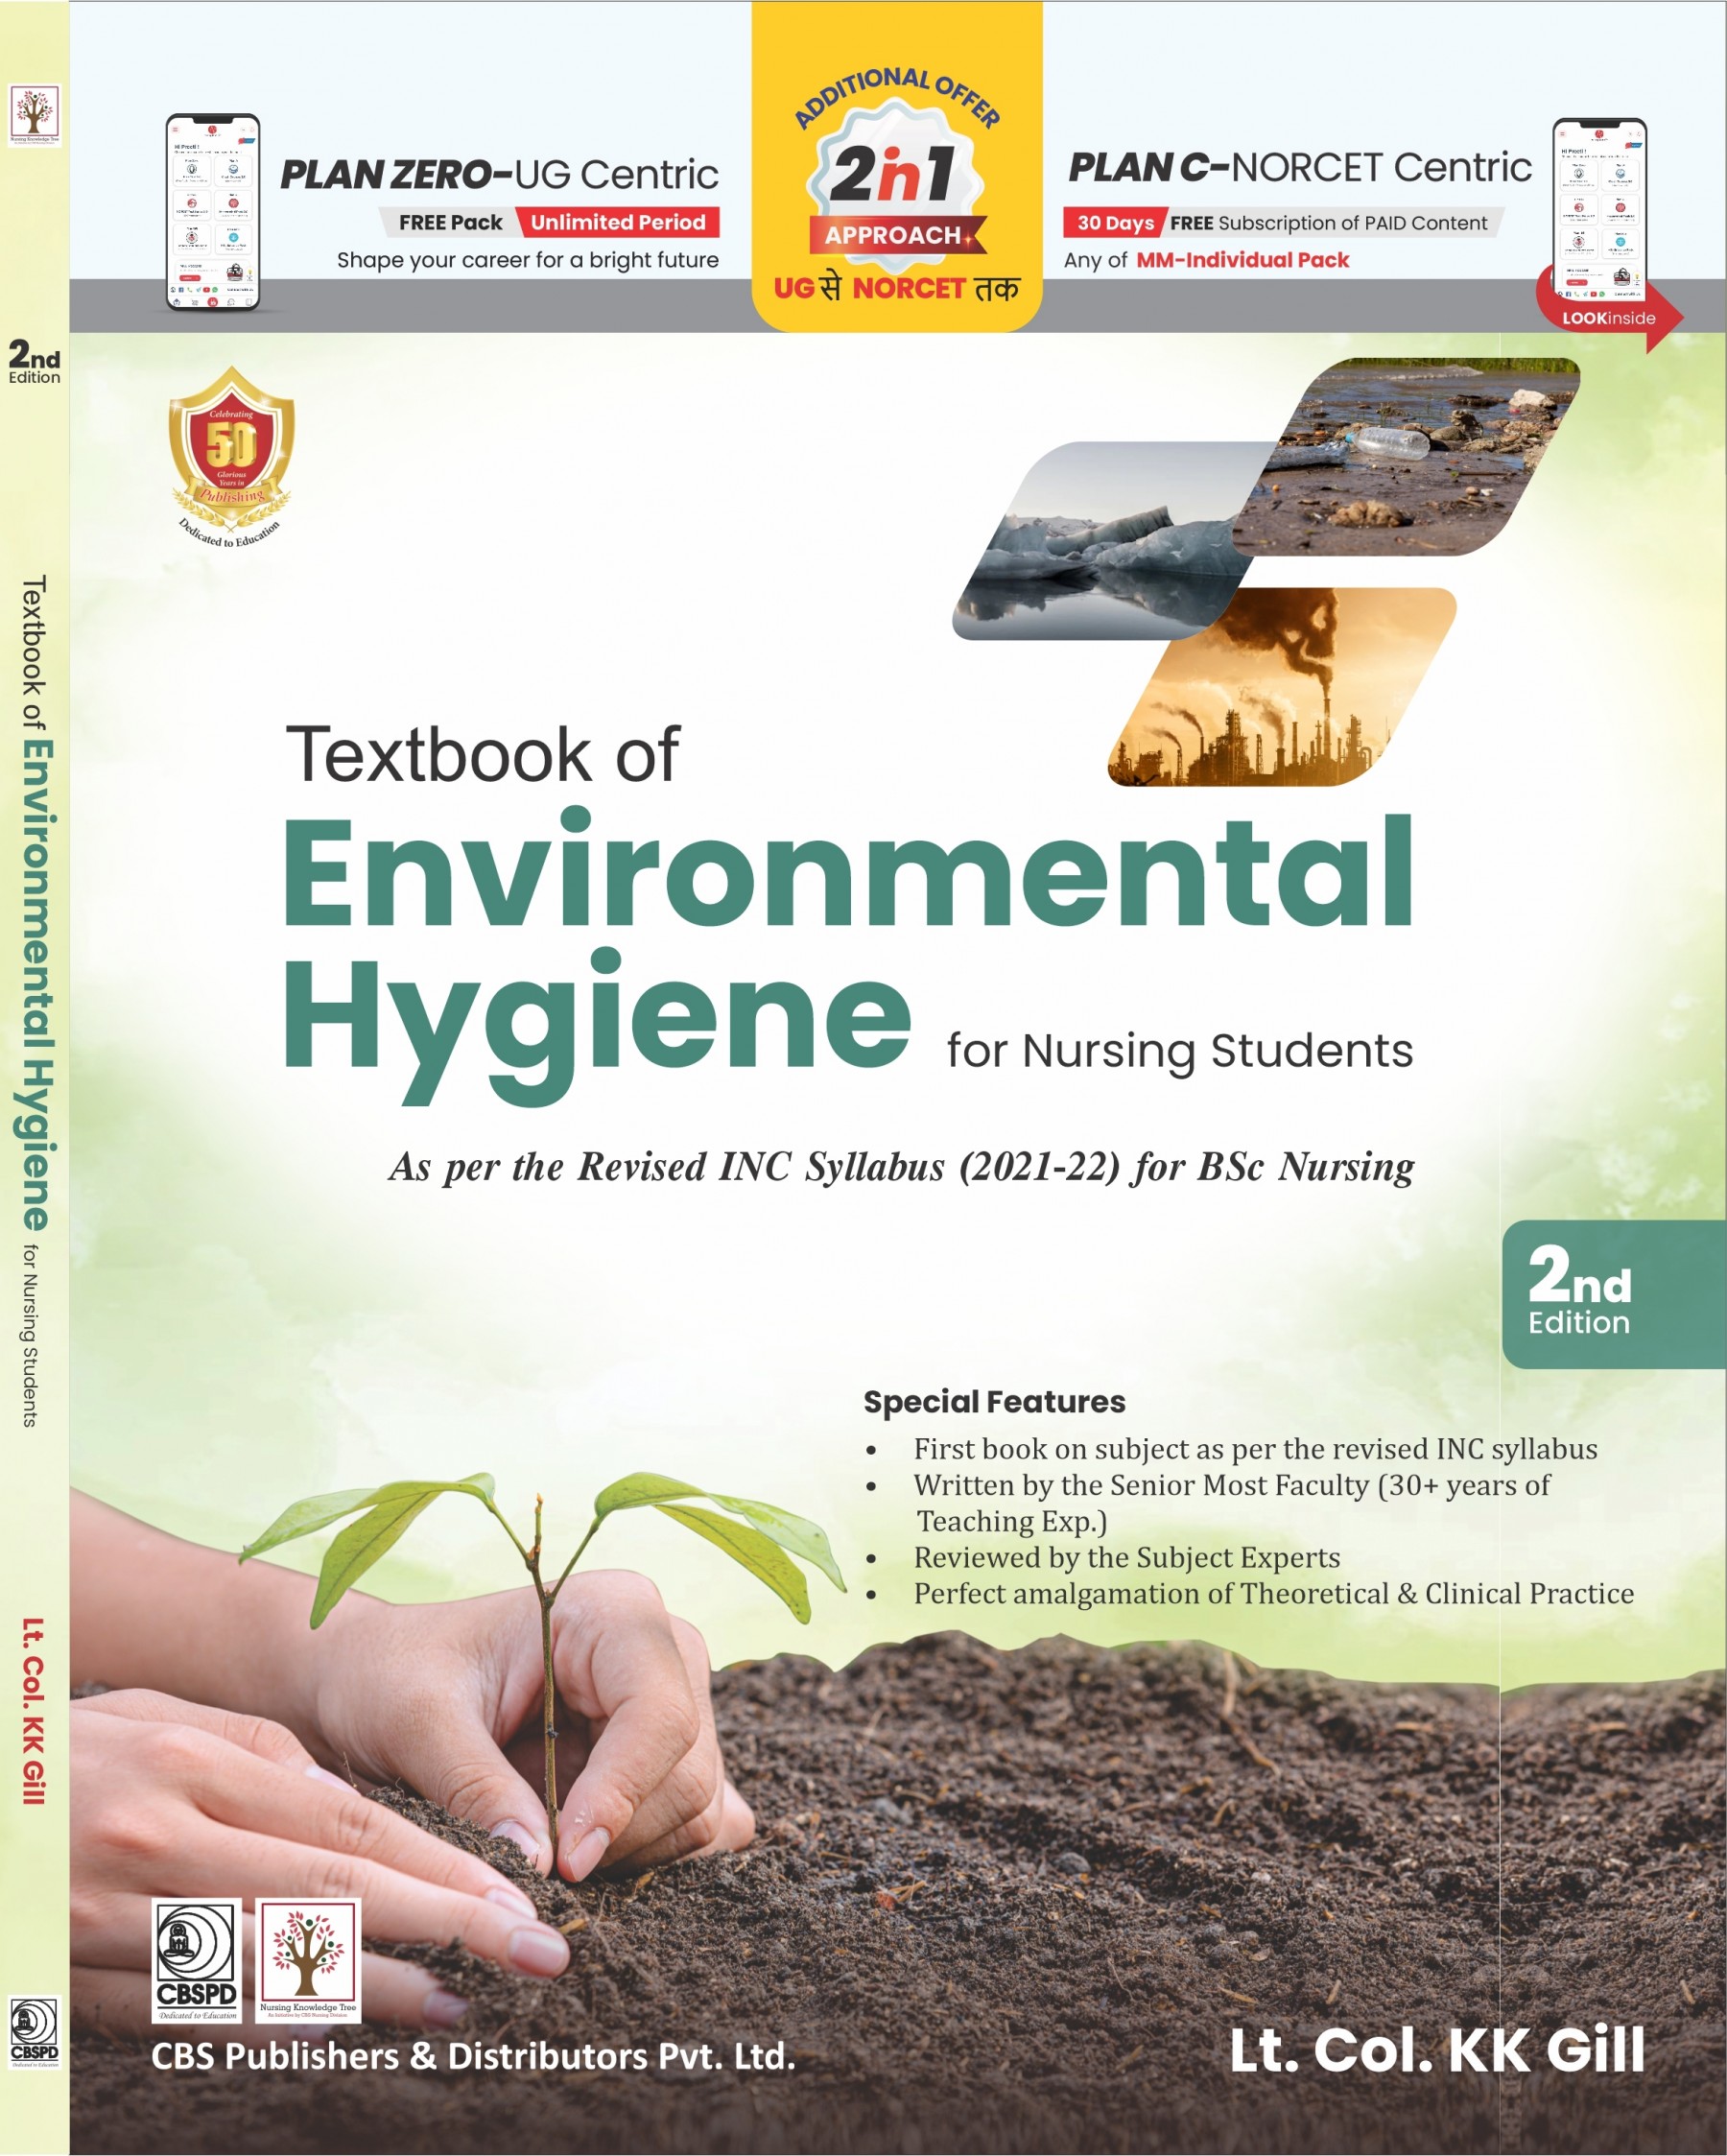 Textbook of Environmental Hygiene for Nursing Students